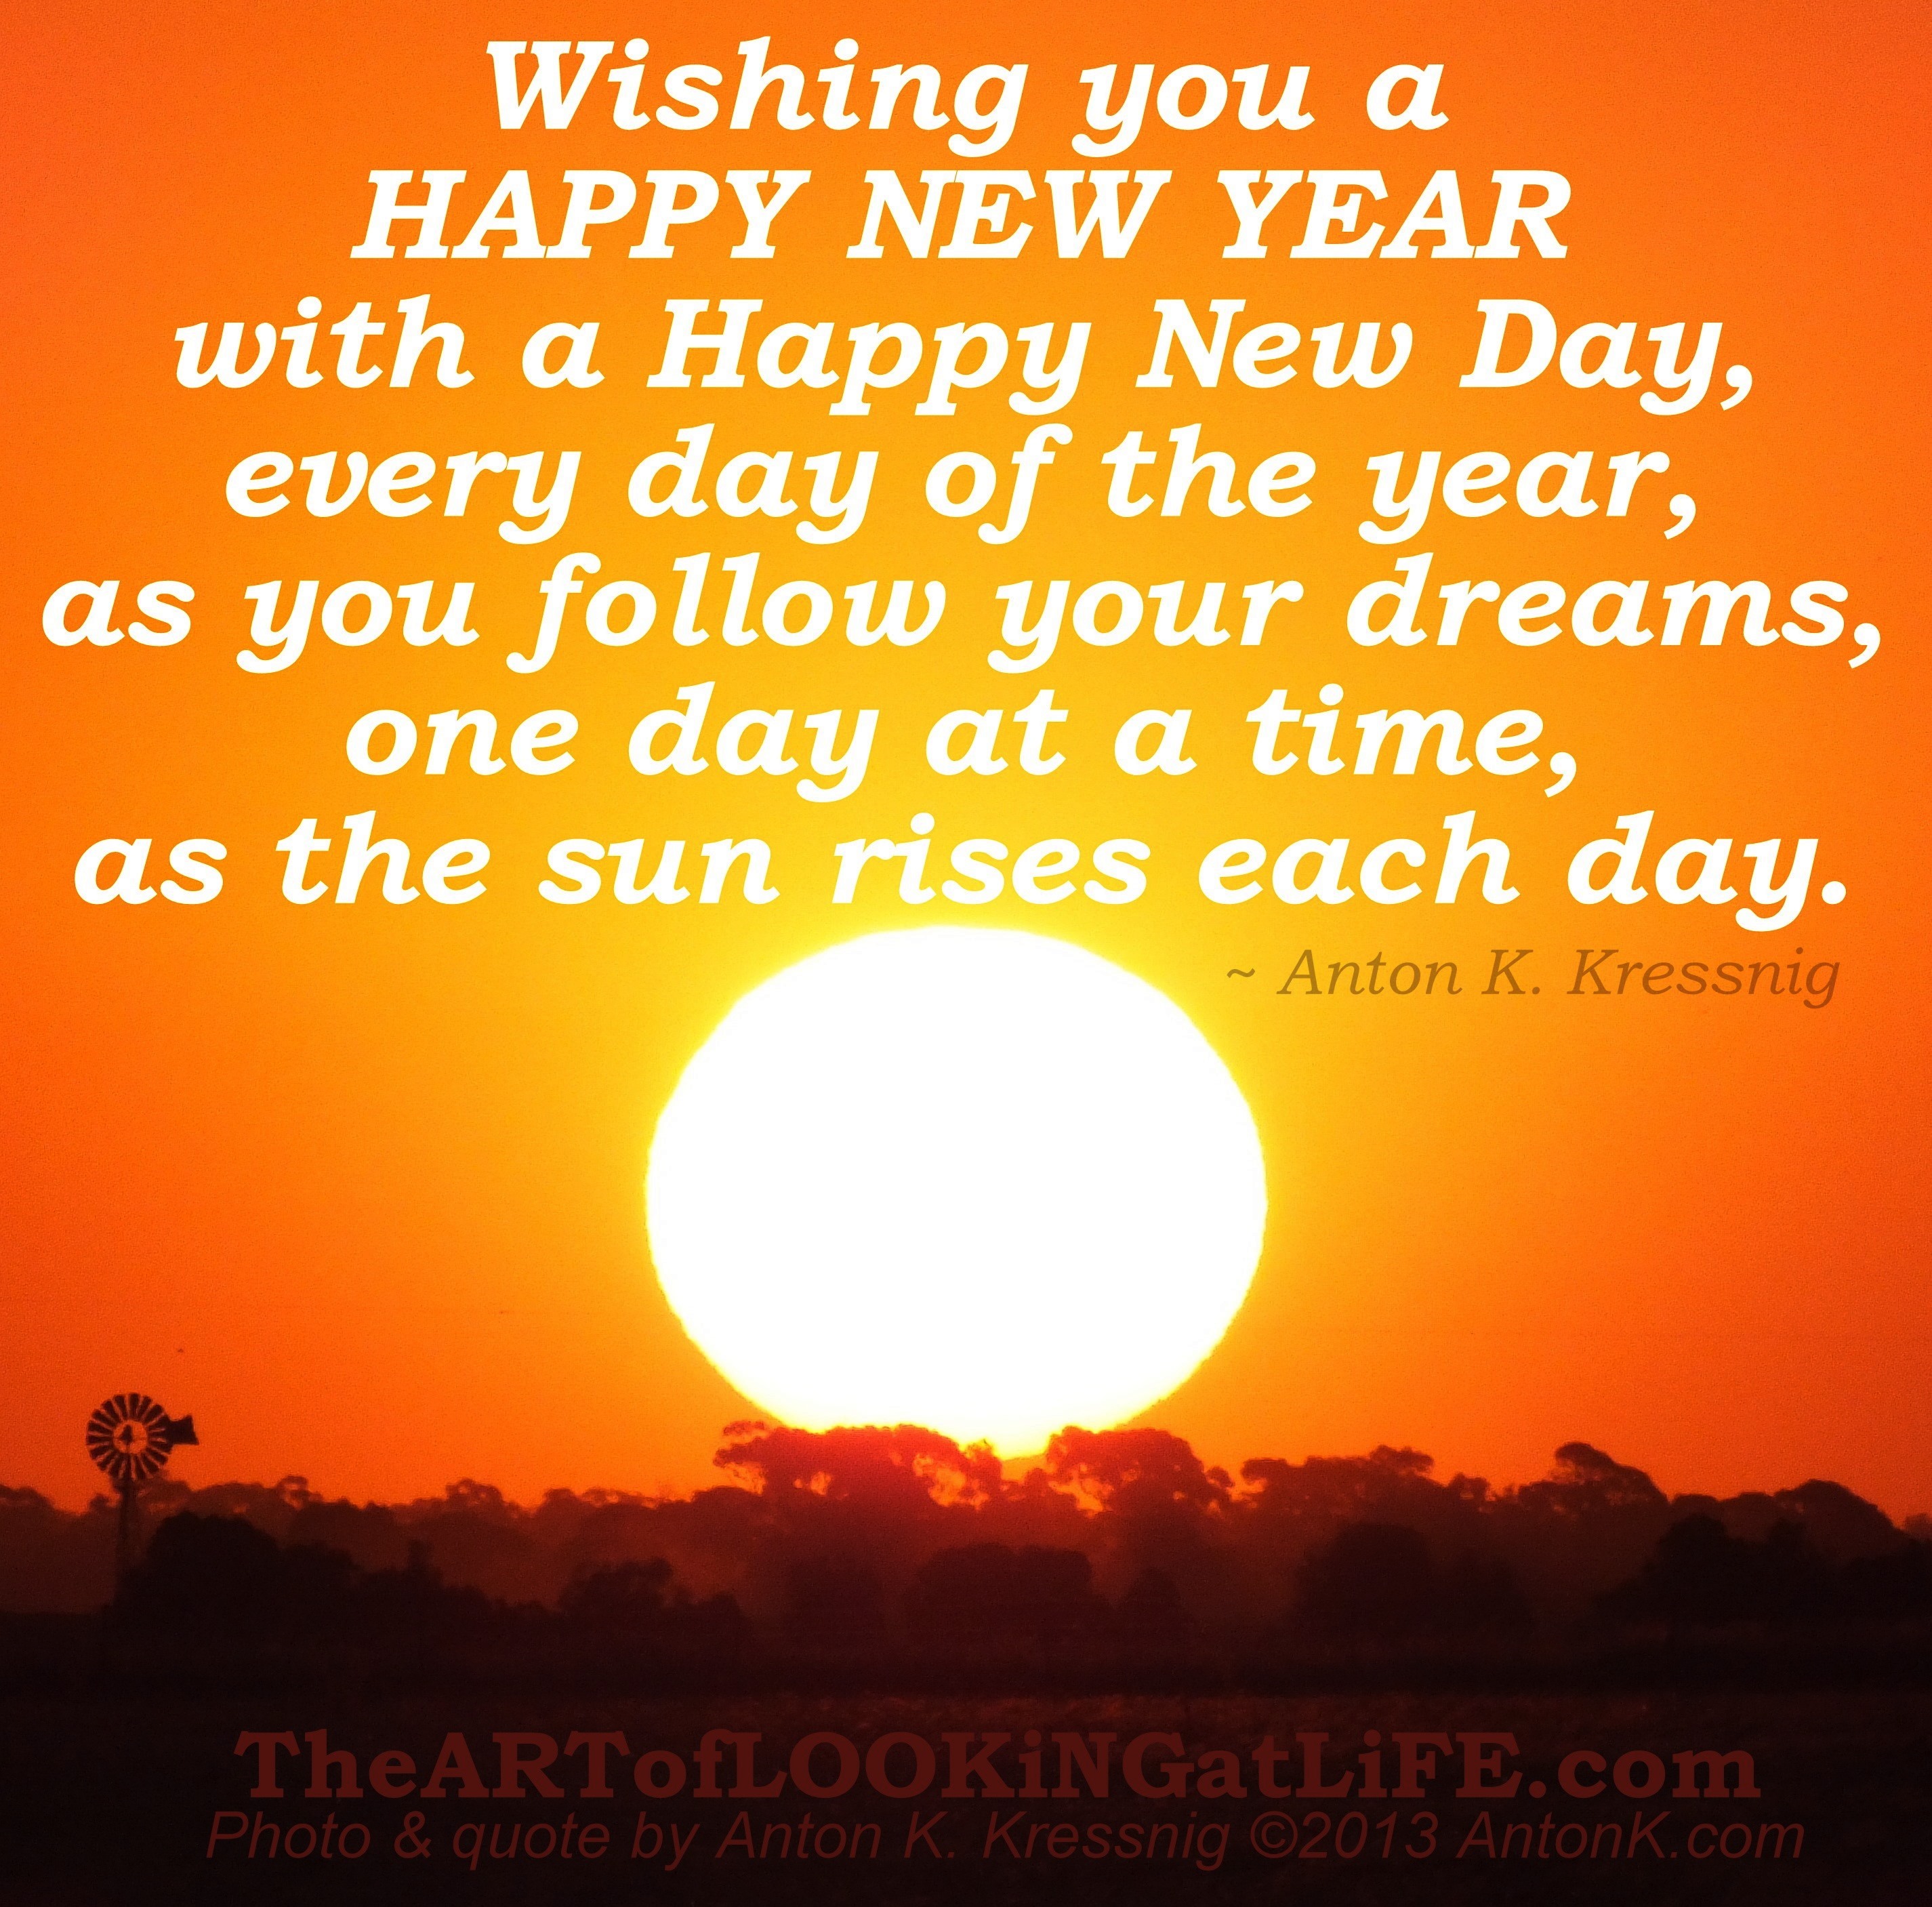 Wishing you Happy New Year Day follow dreams sunrises motivational message quote meme resolutions Australian photo Anton Kressnig